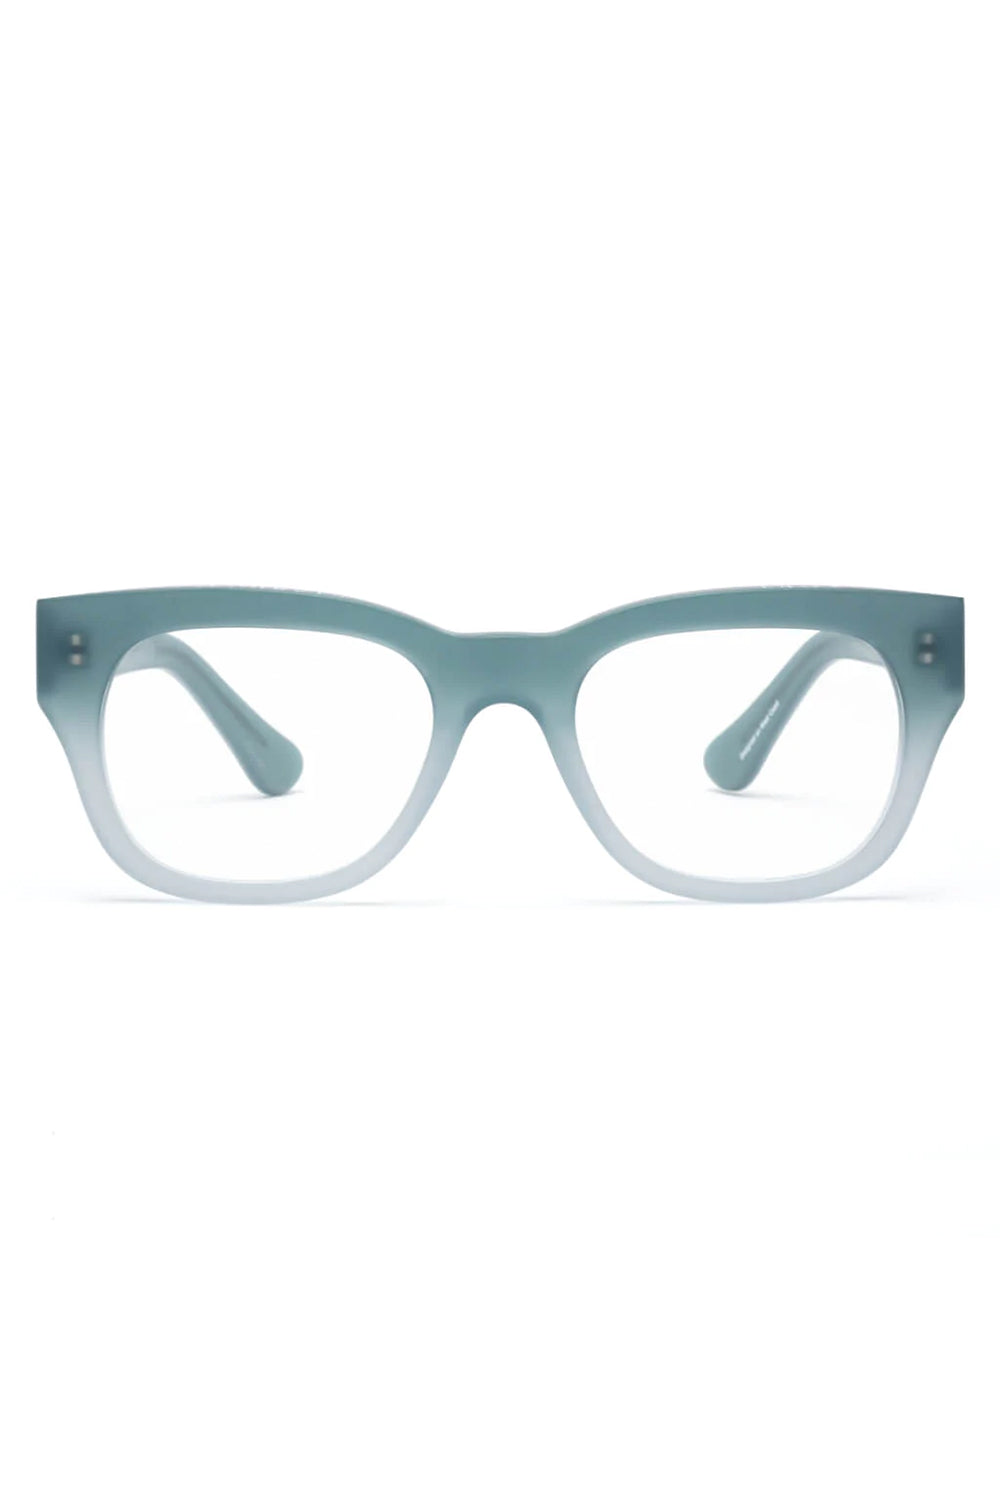 Caddis MIKLOS Optical Glasses